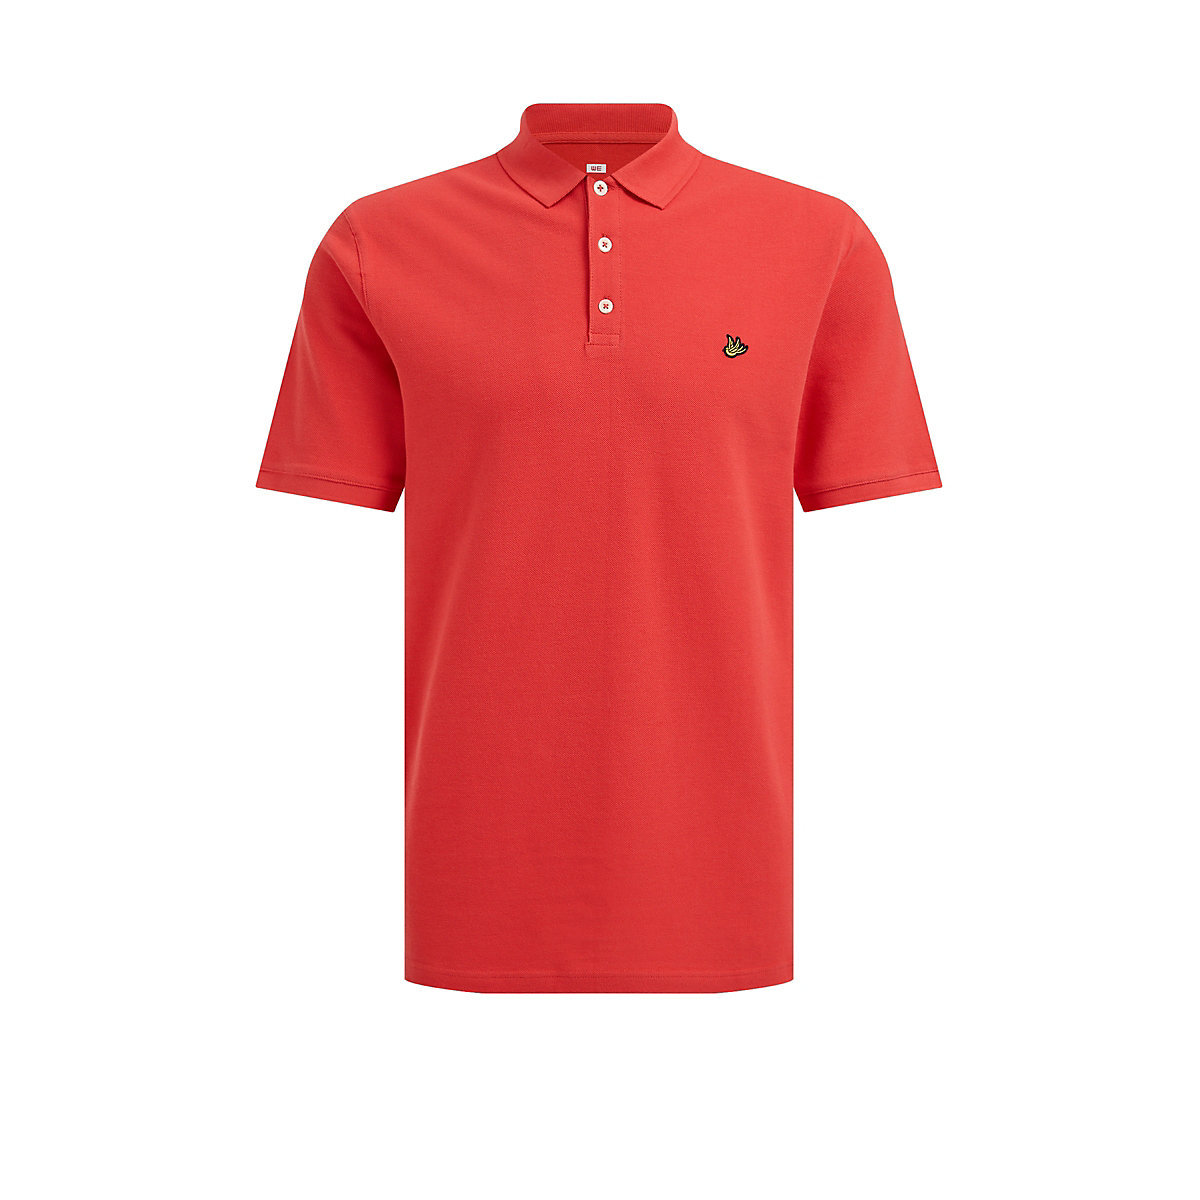 WE Fashion Extra langes Herren-Poloshirt mit Struktur Poloshirts rot